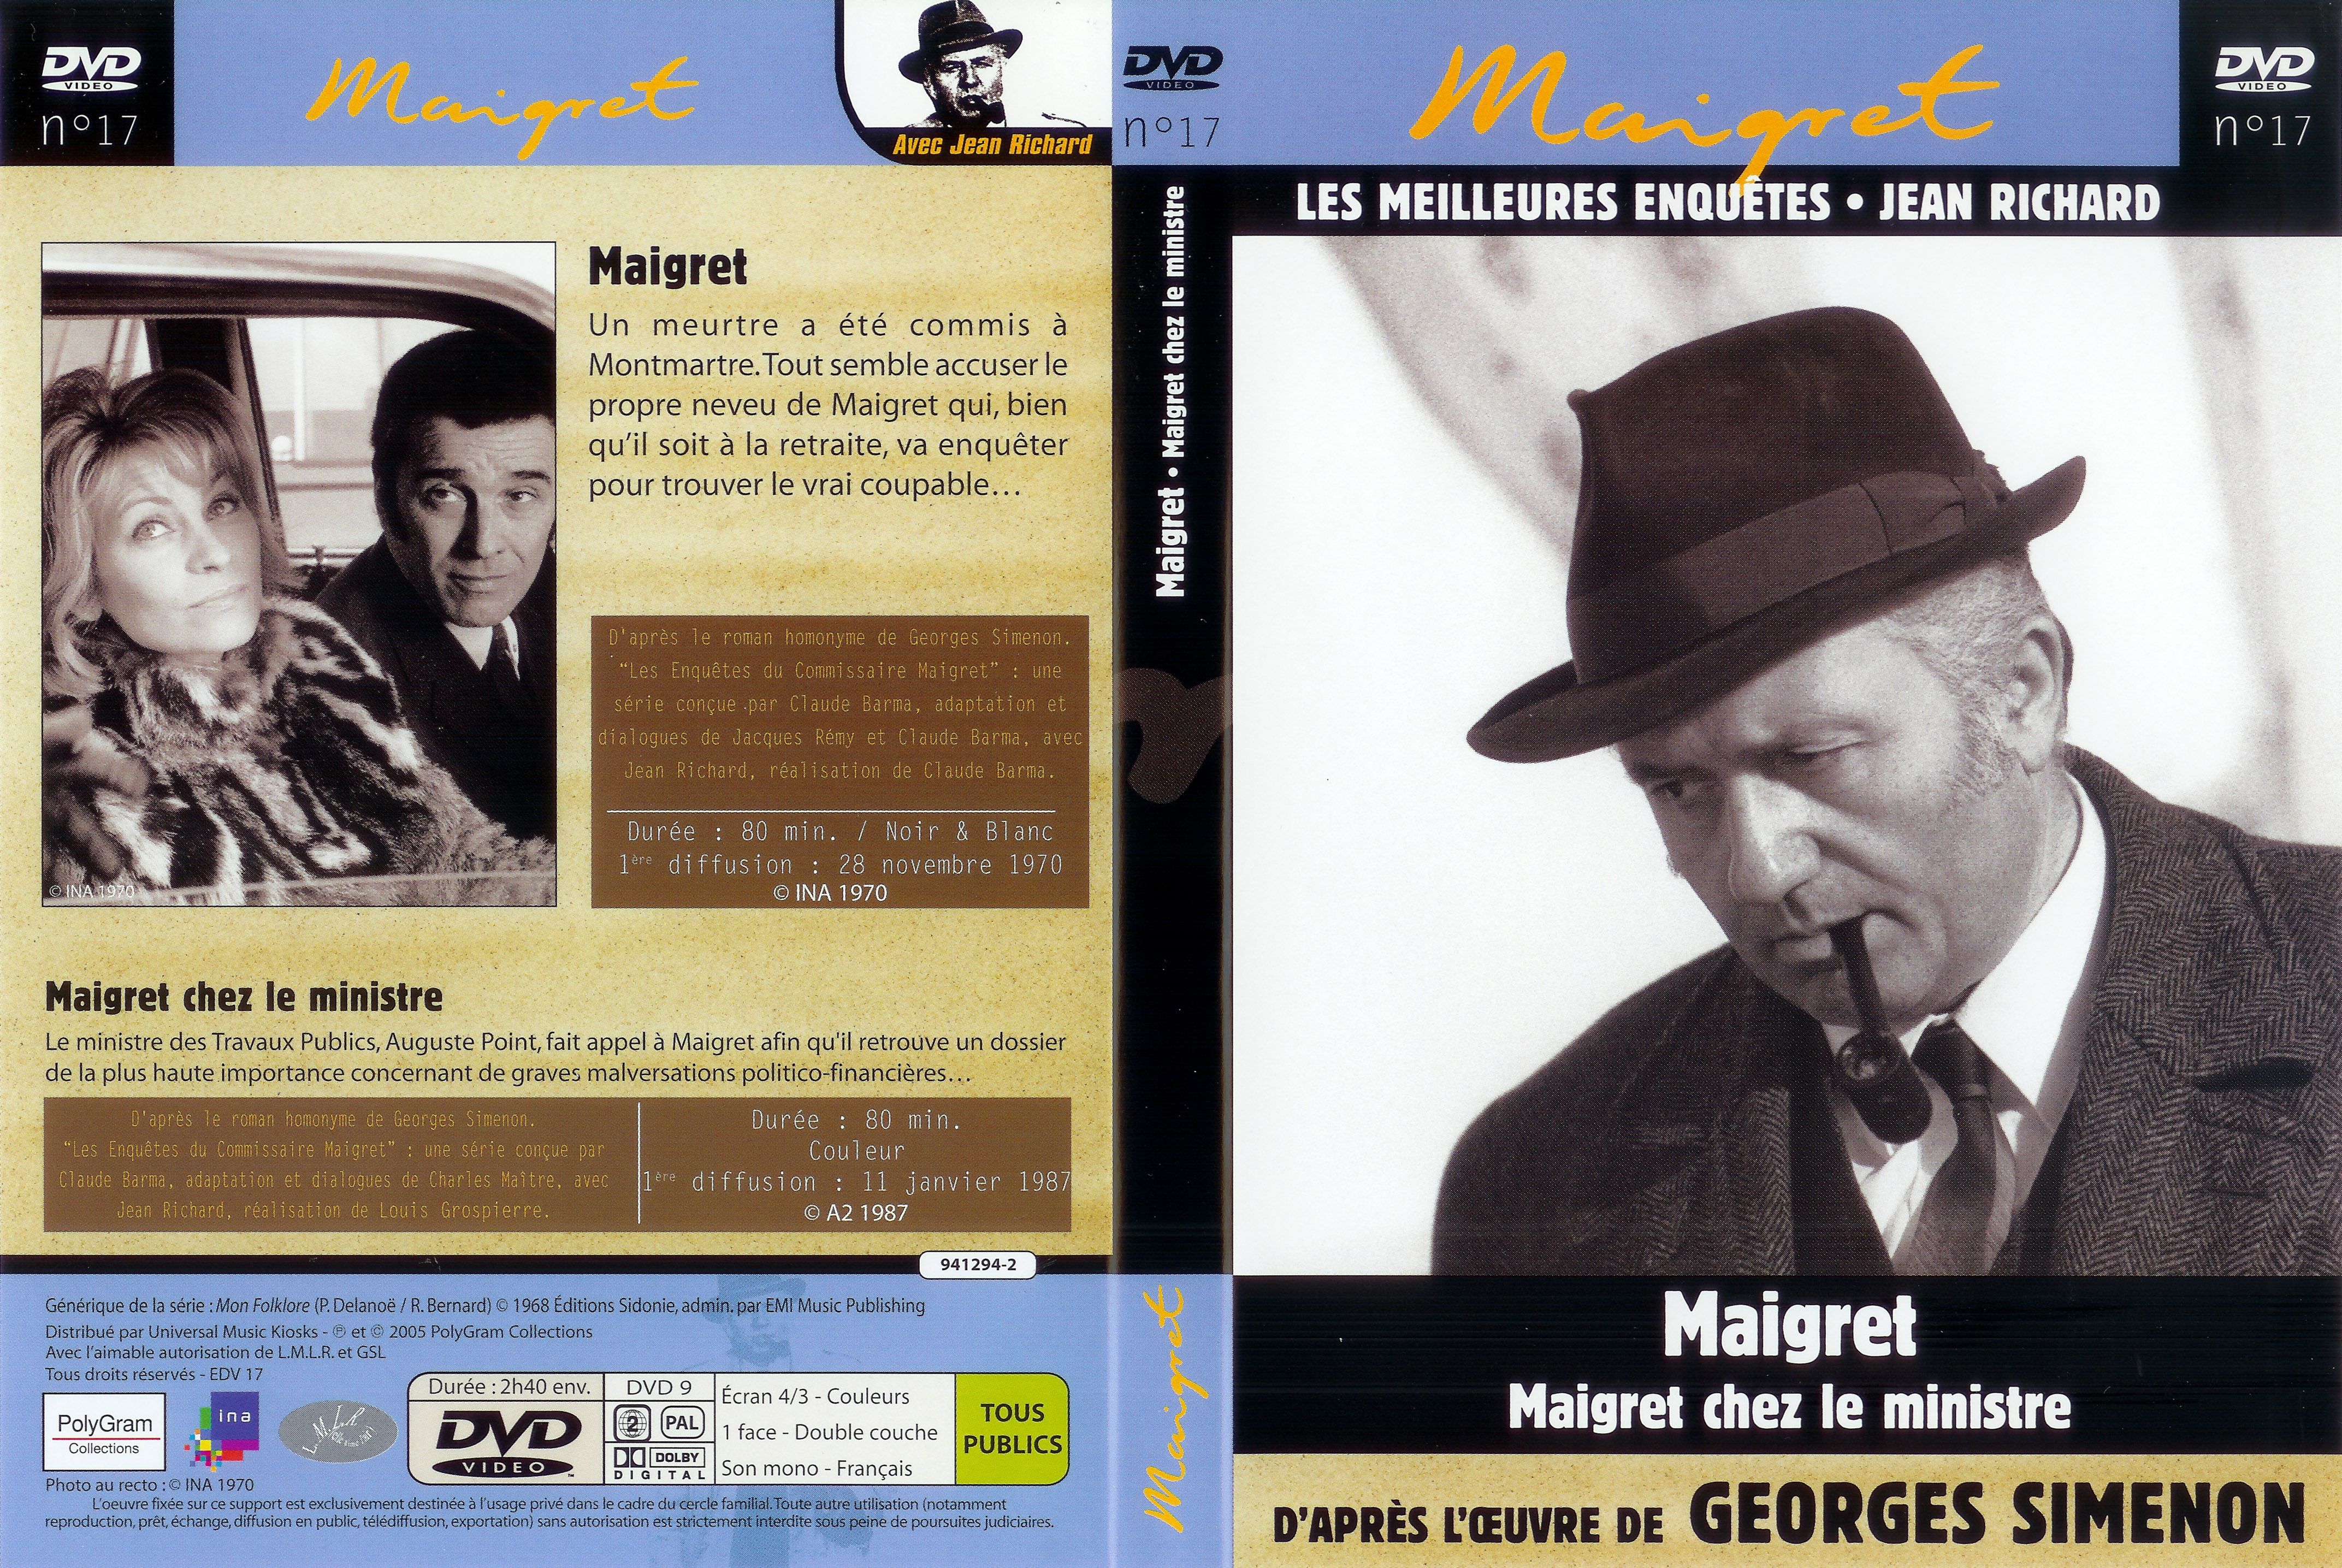 Jaquette DVD Maigret (Jean Richard) vol 17